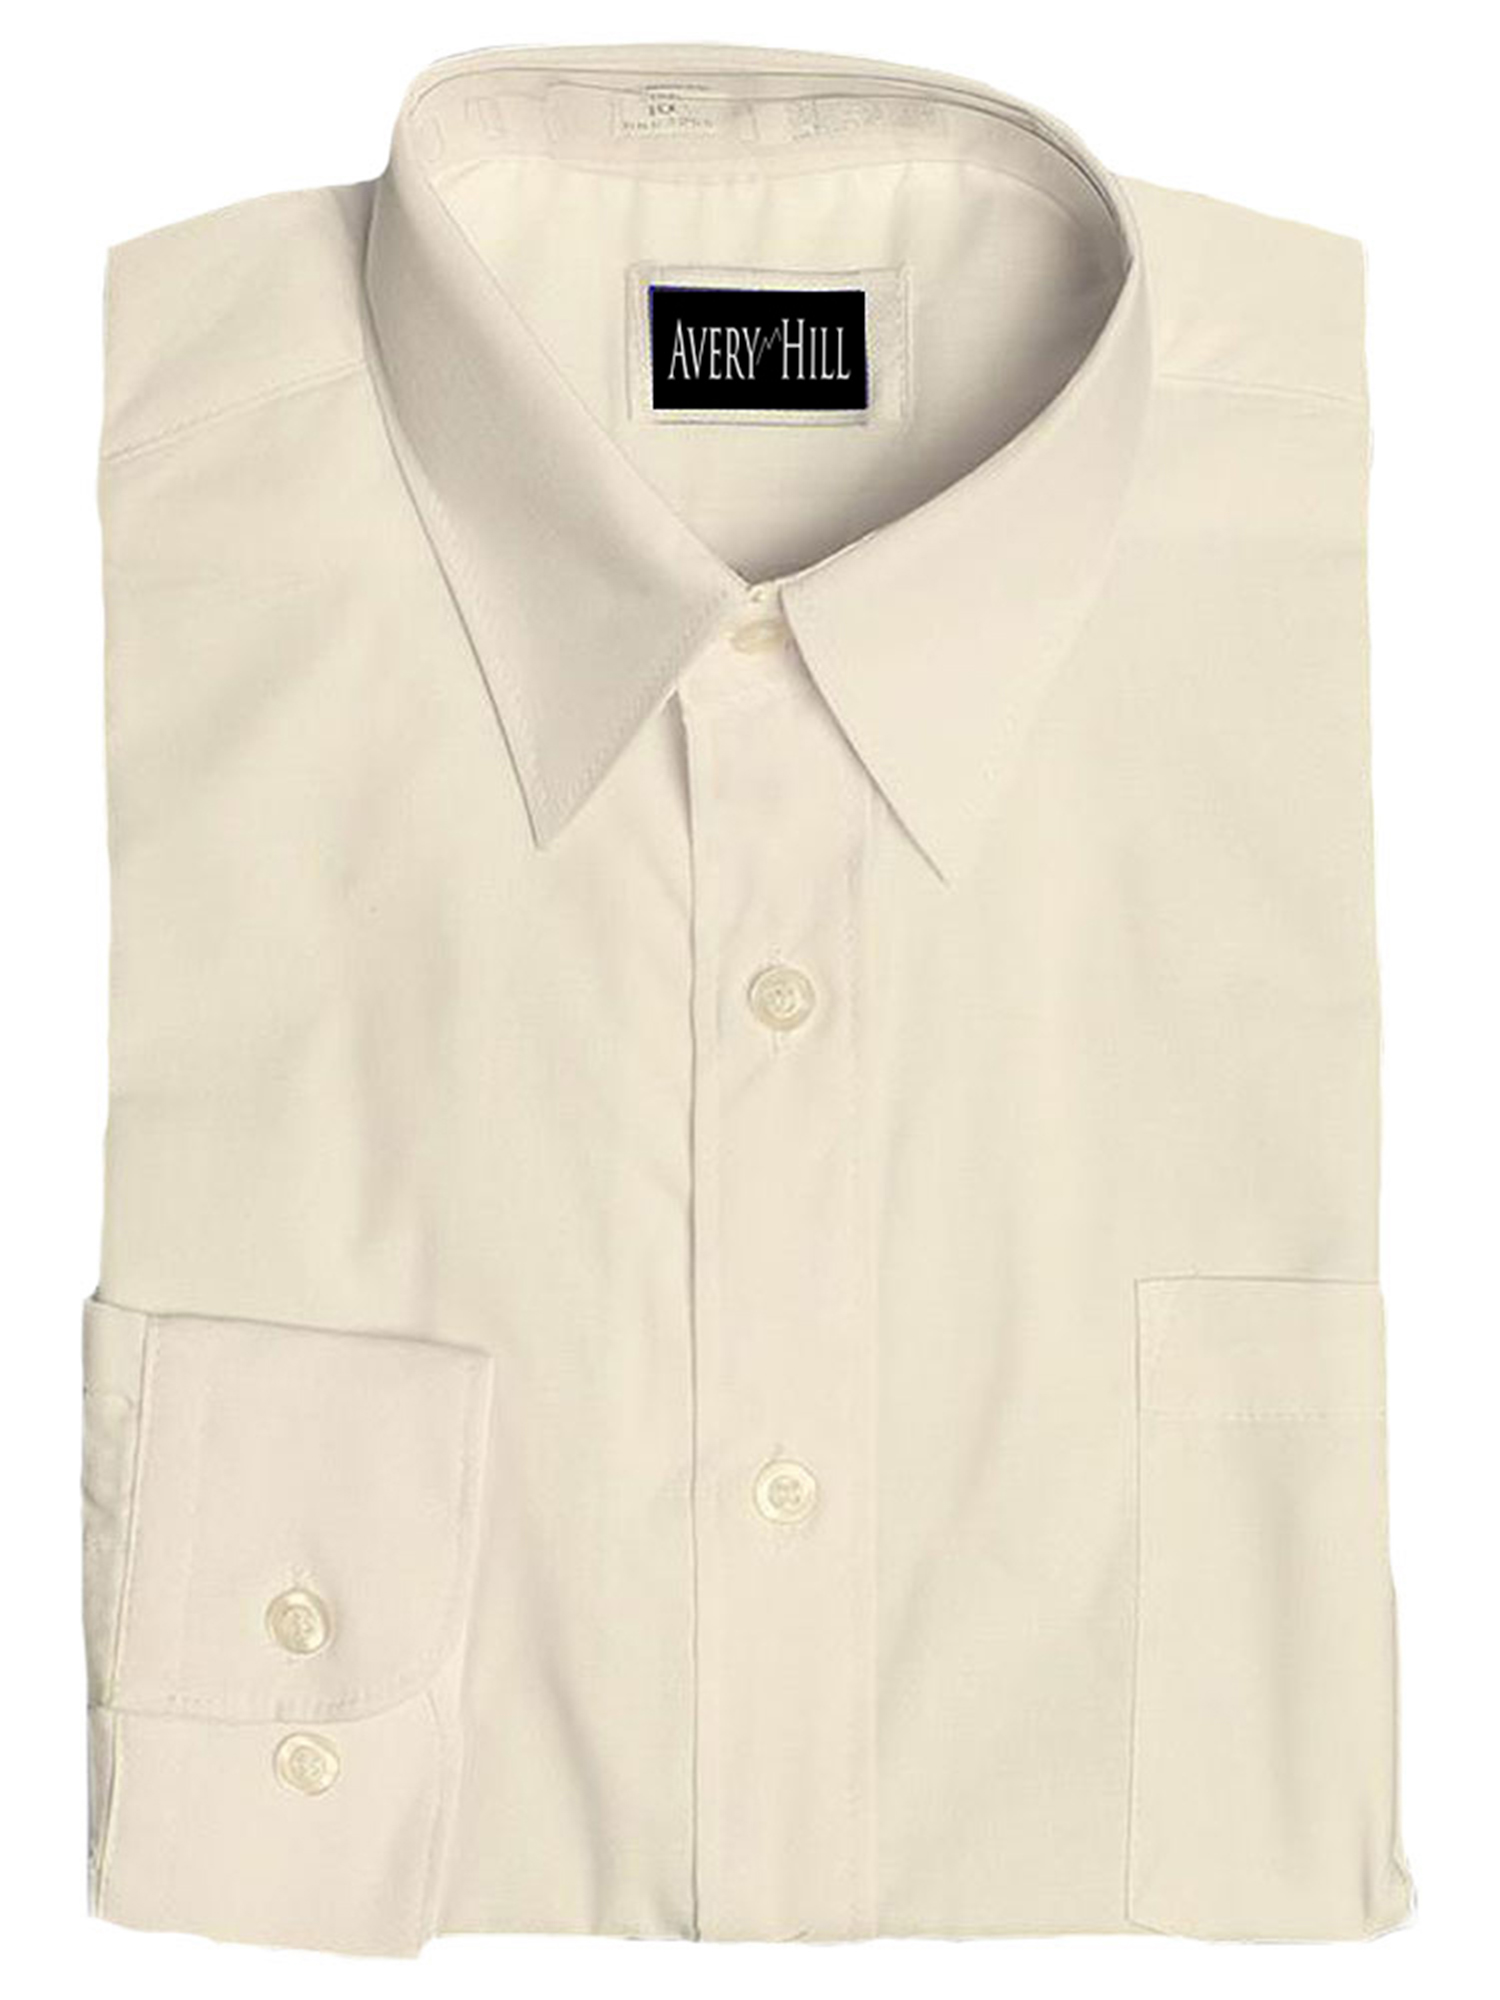 Boys White or Ivory Long Sleeve Wrinkle Resistant Dress Shirt IV 12X